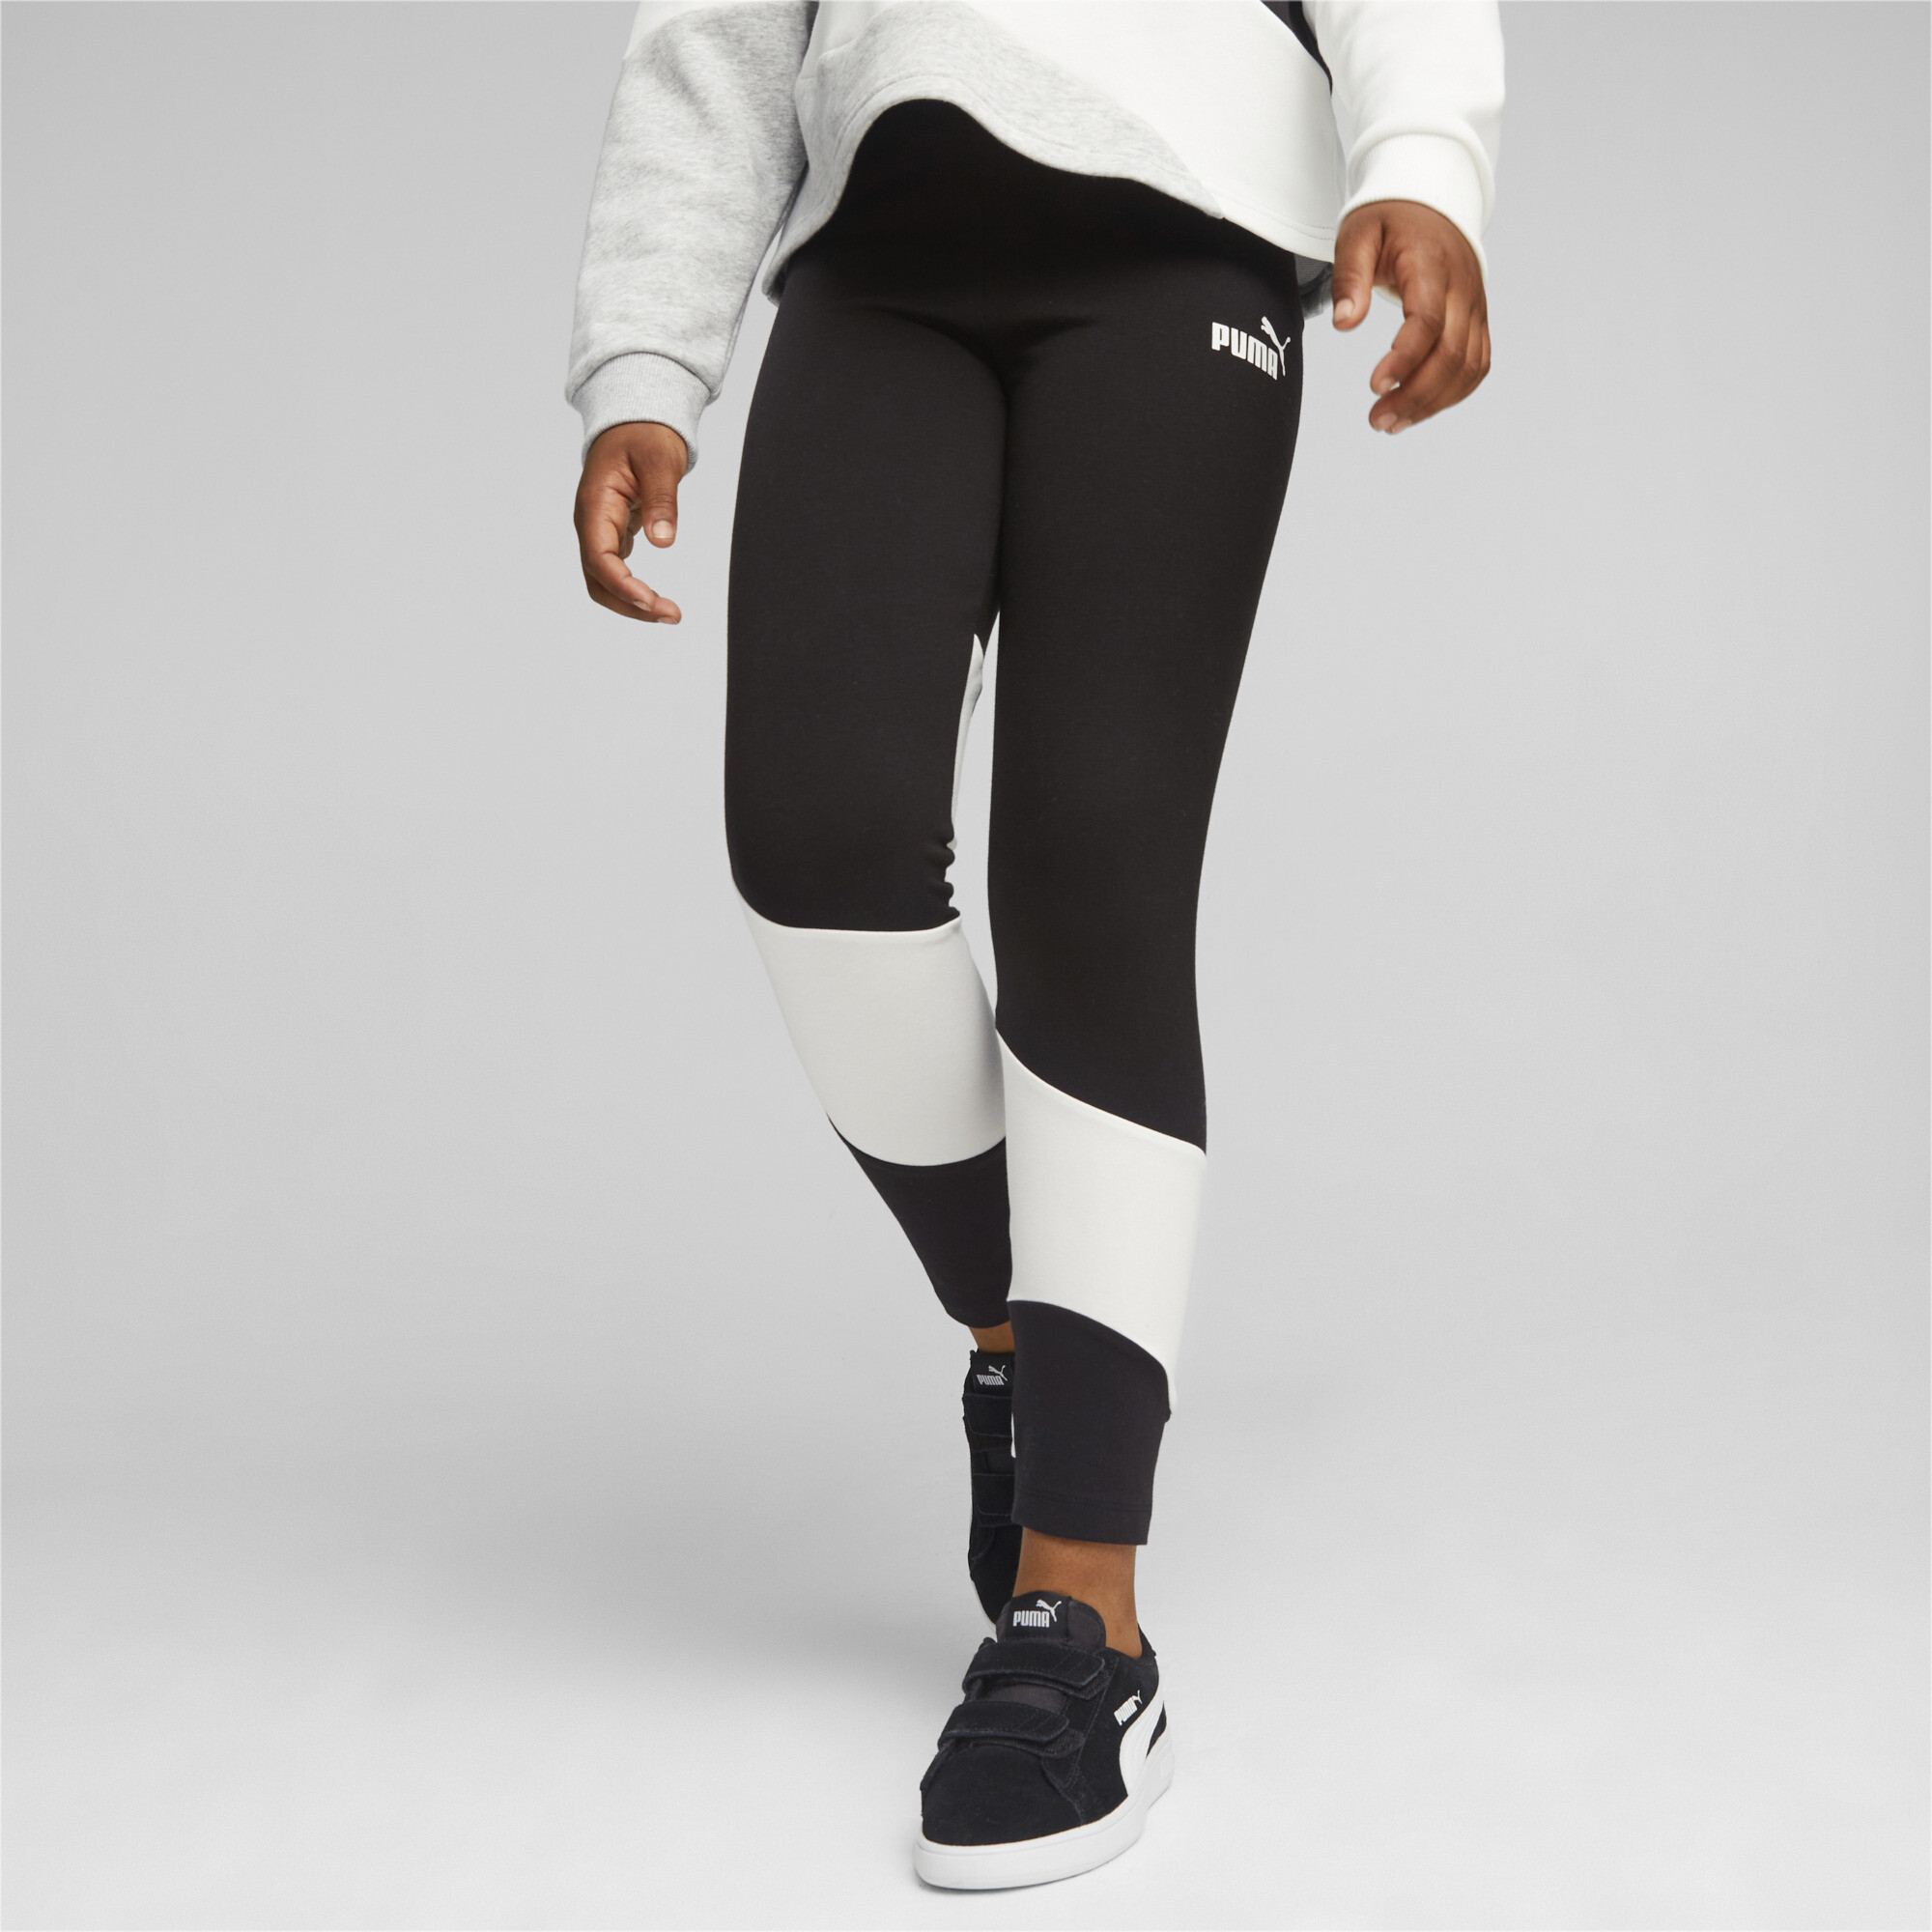 Women's Puma POWER Youth Leggings, Black, Size 9-10Y, Clothing